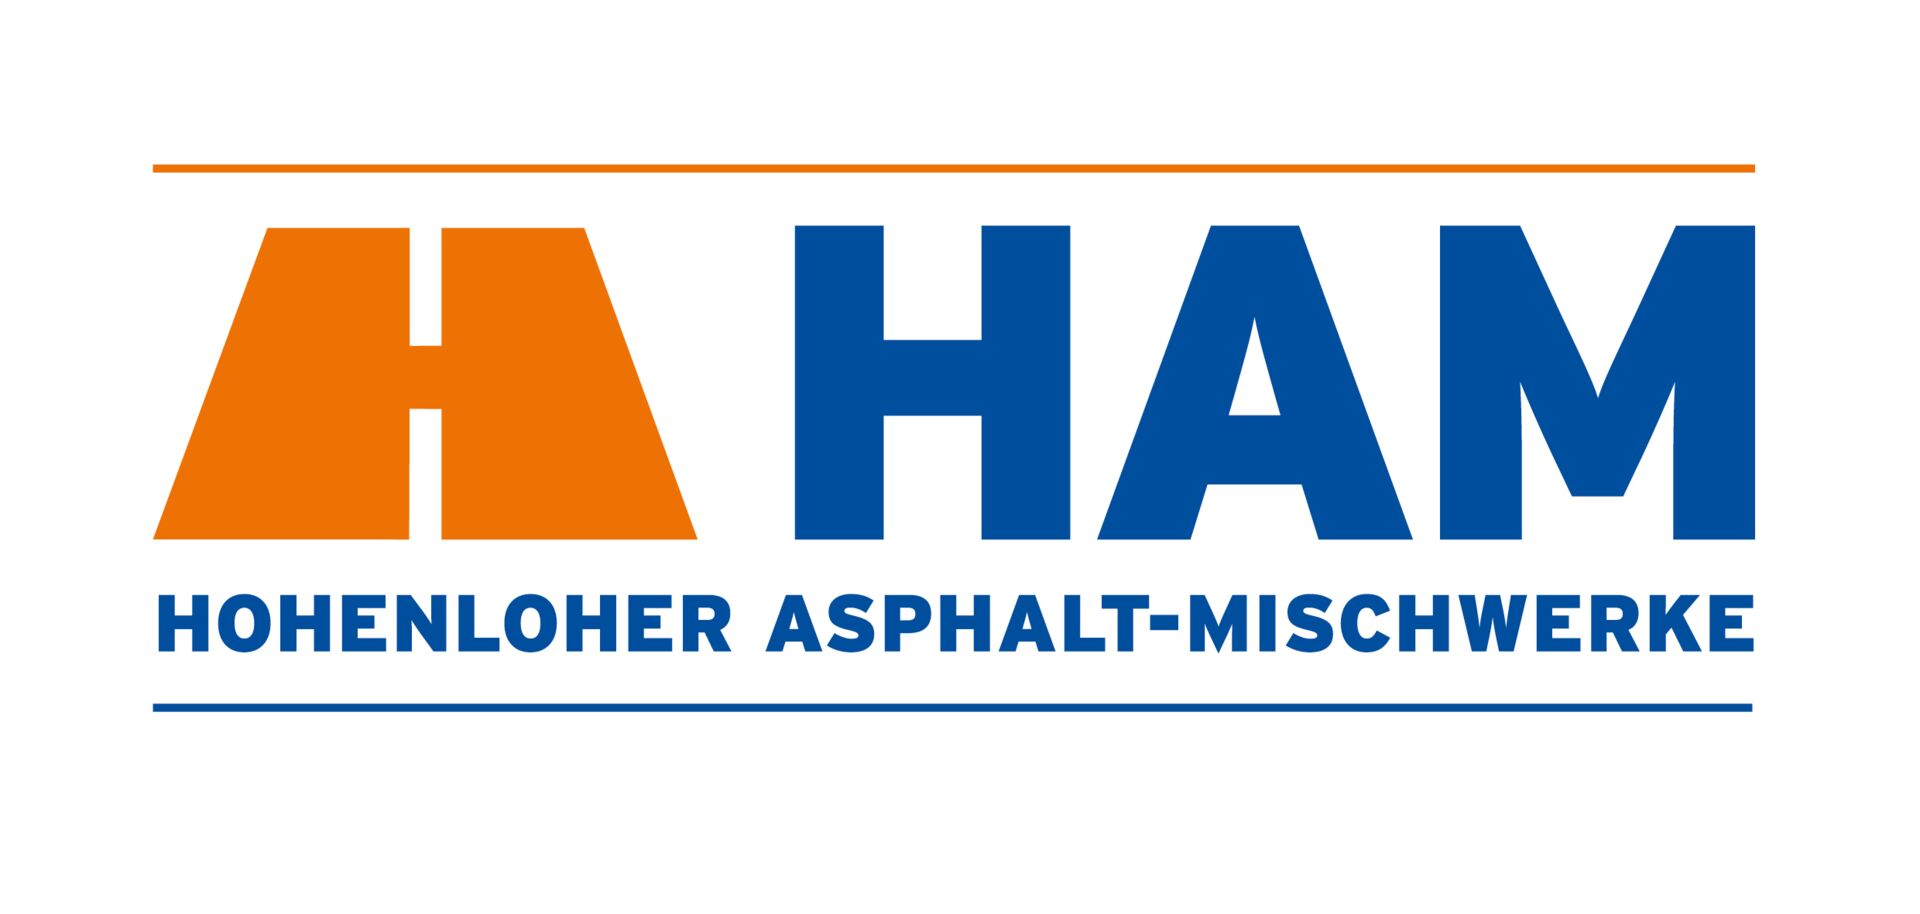 Hohenloher Asphalt-Mischwerke GmbH & Co. KG